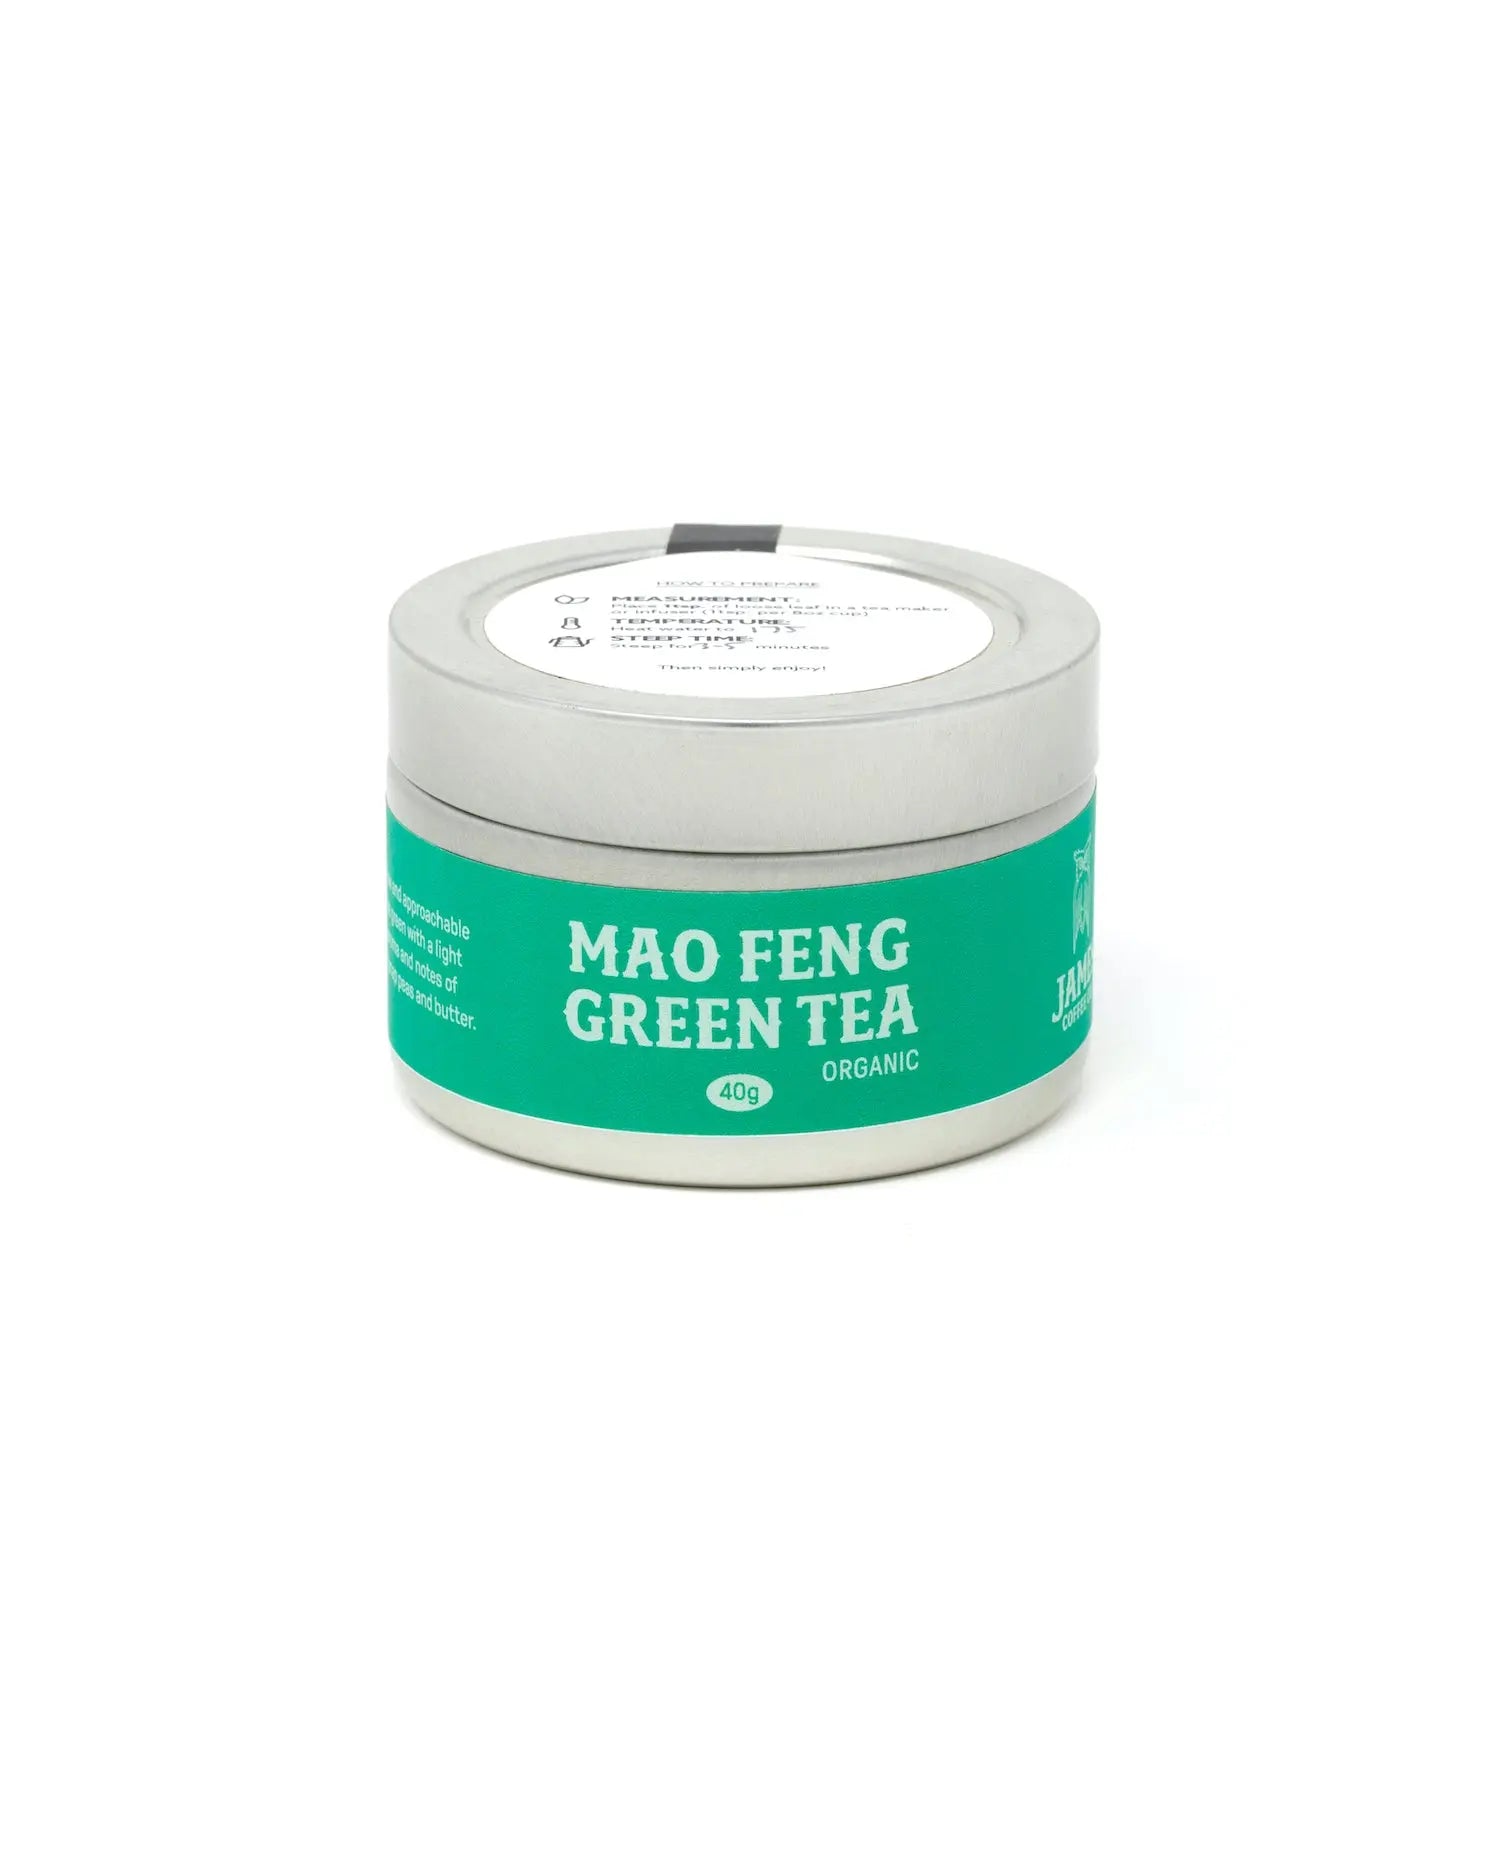 Mao Feng Green Tea ORG James Coffee Co.